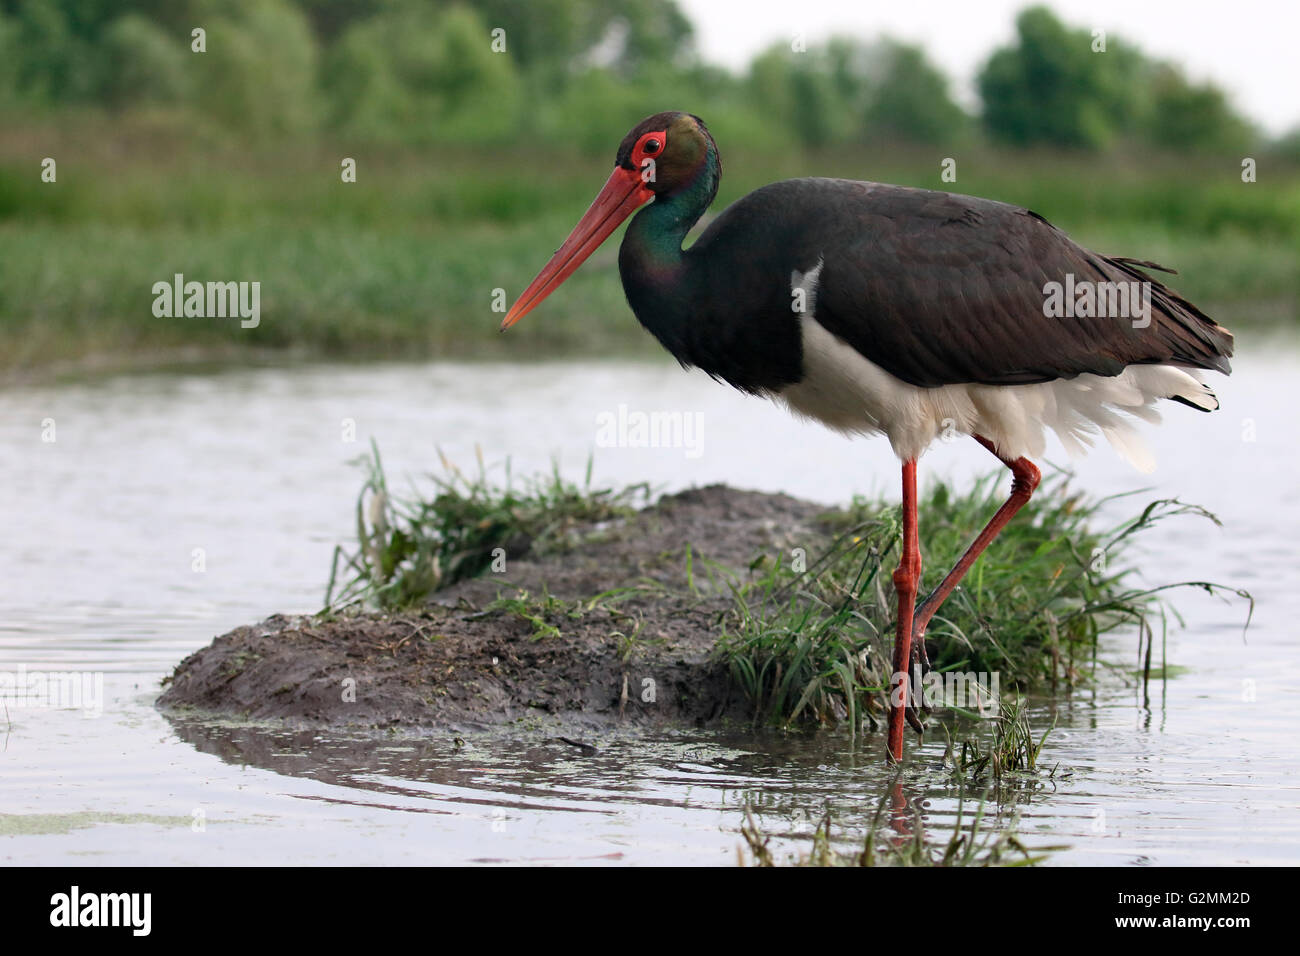 Black stork, Ciconia nigra, single bird in water, Hungary, May 2016 Stock Photo